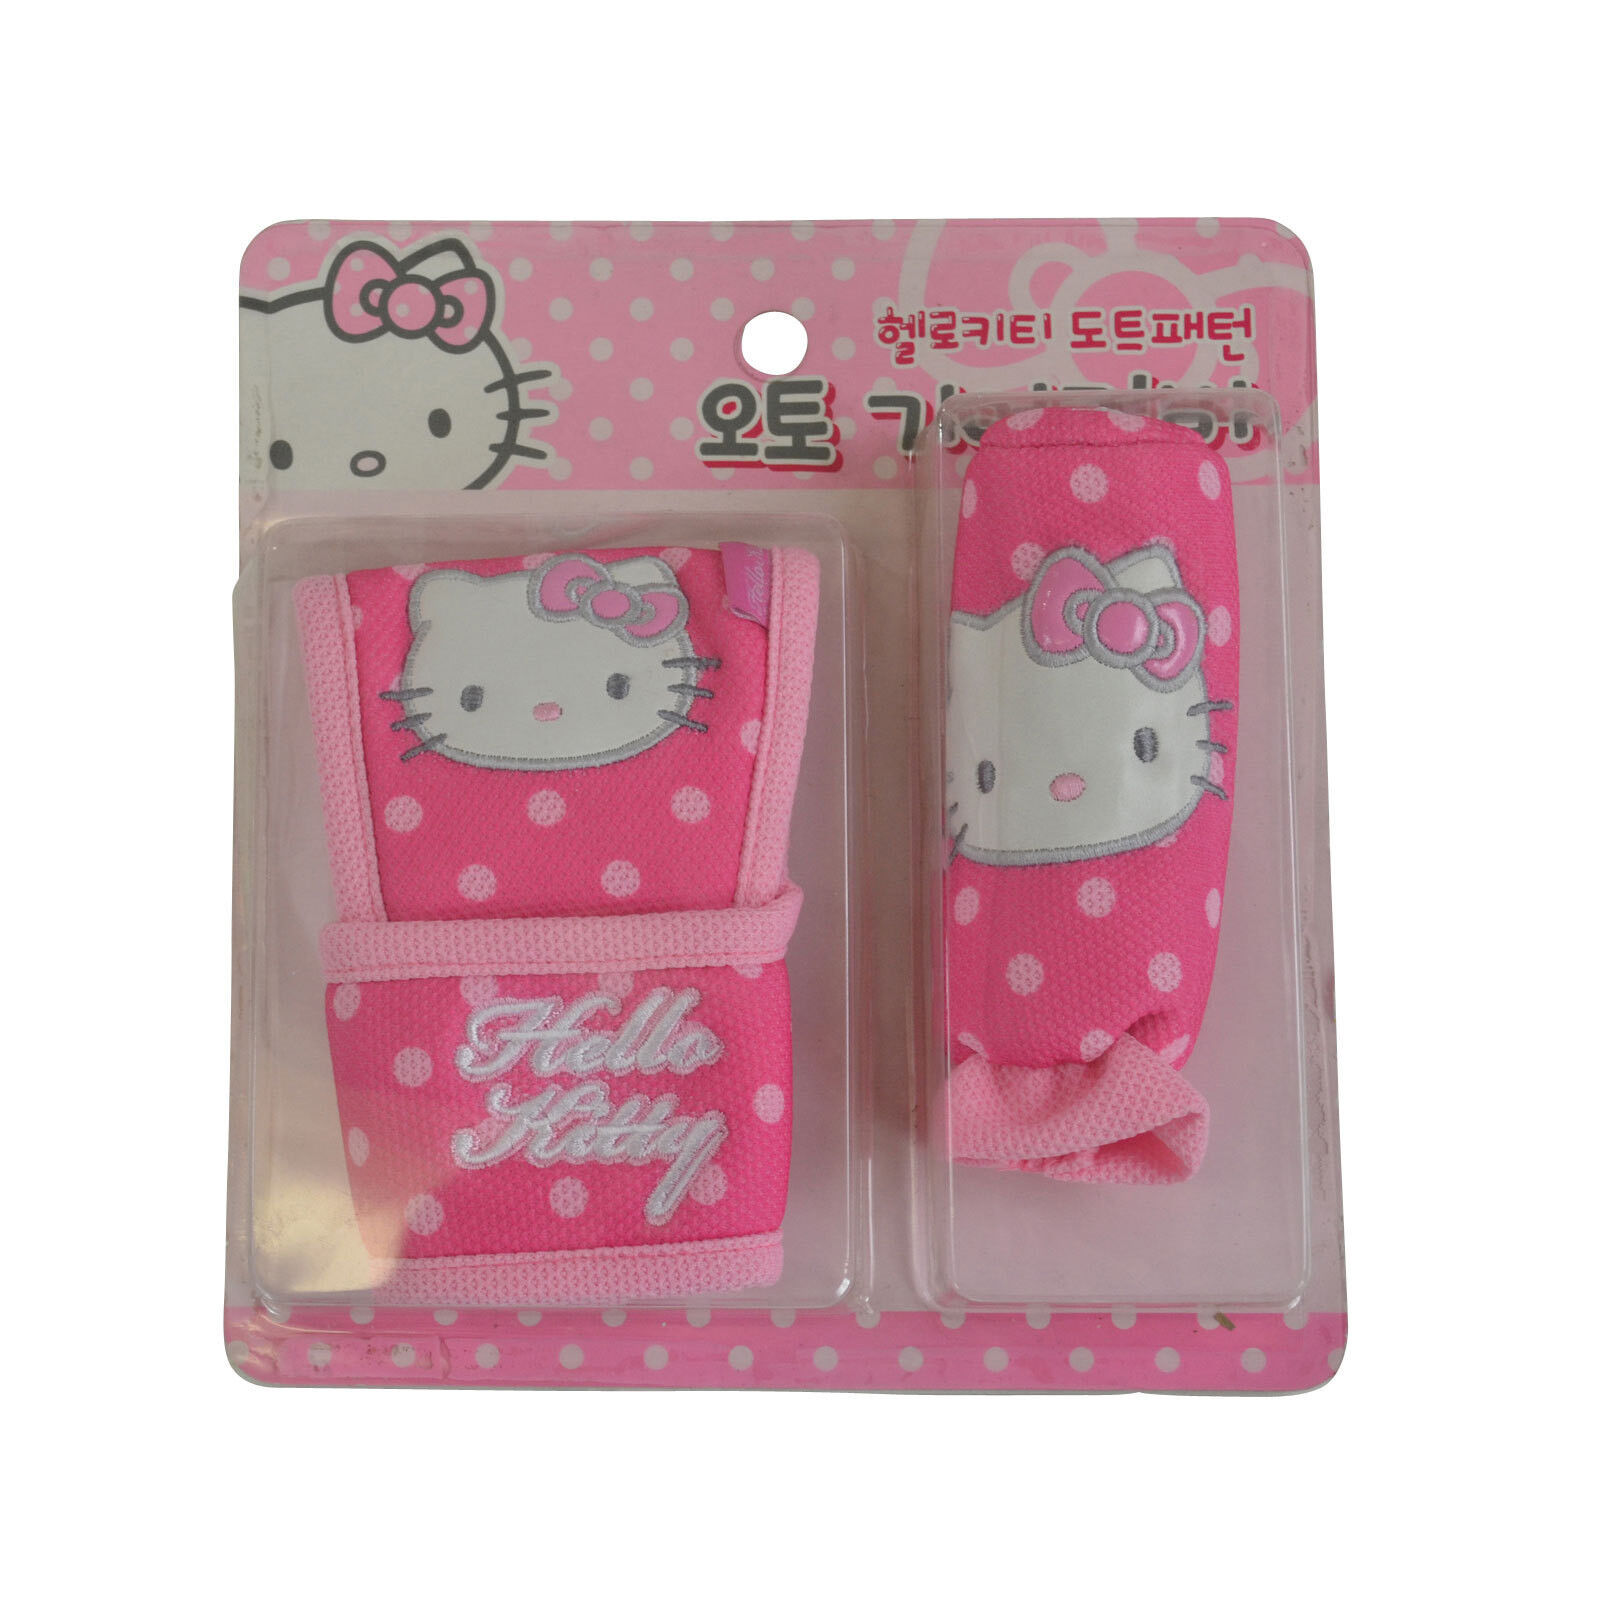 New Sanrio Hello Kitty Hot Pink Polka Dots Car Truck Shift & Hand Brake Cover